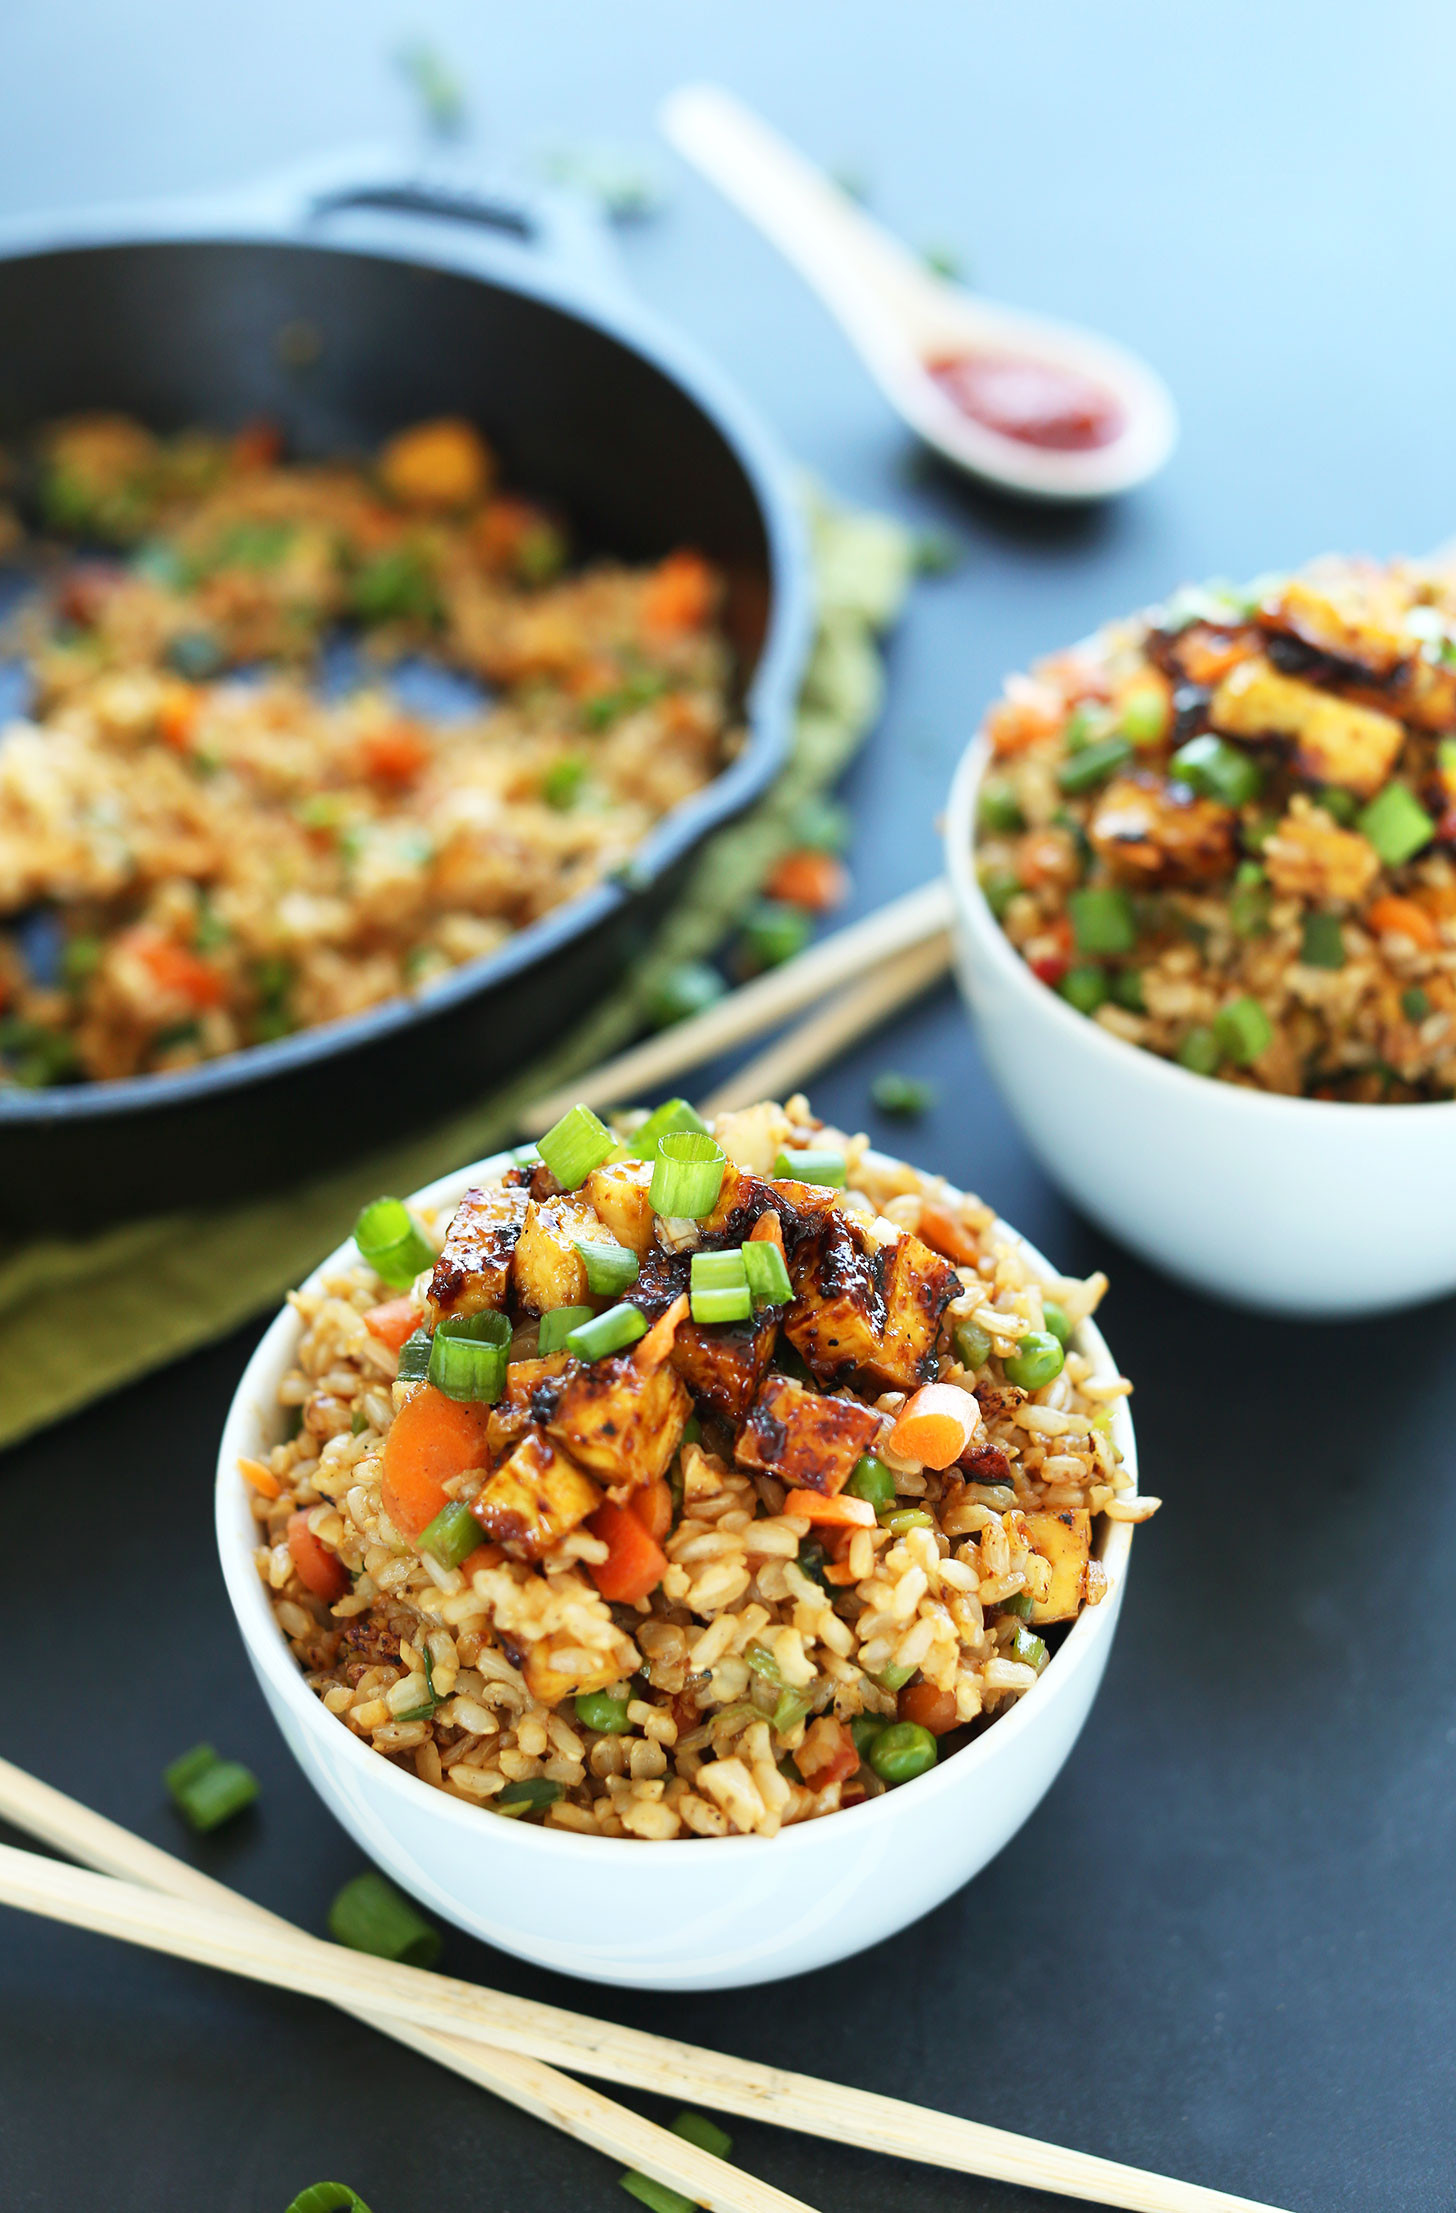 Vegan Recipes With Rice
 ve arian recipes easy